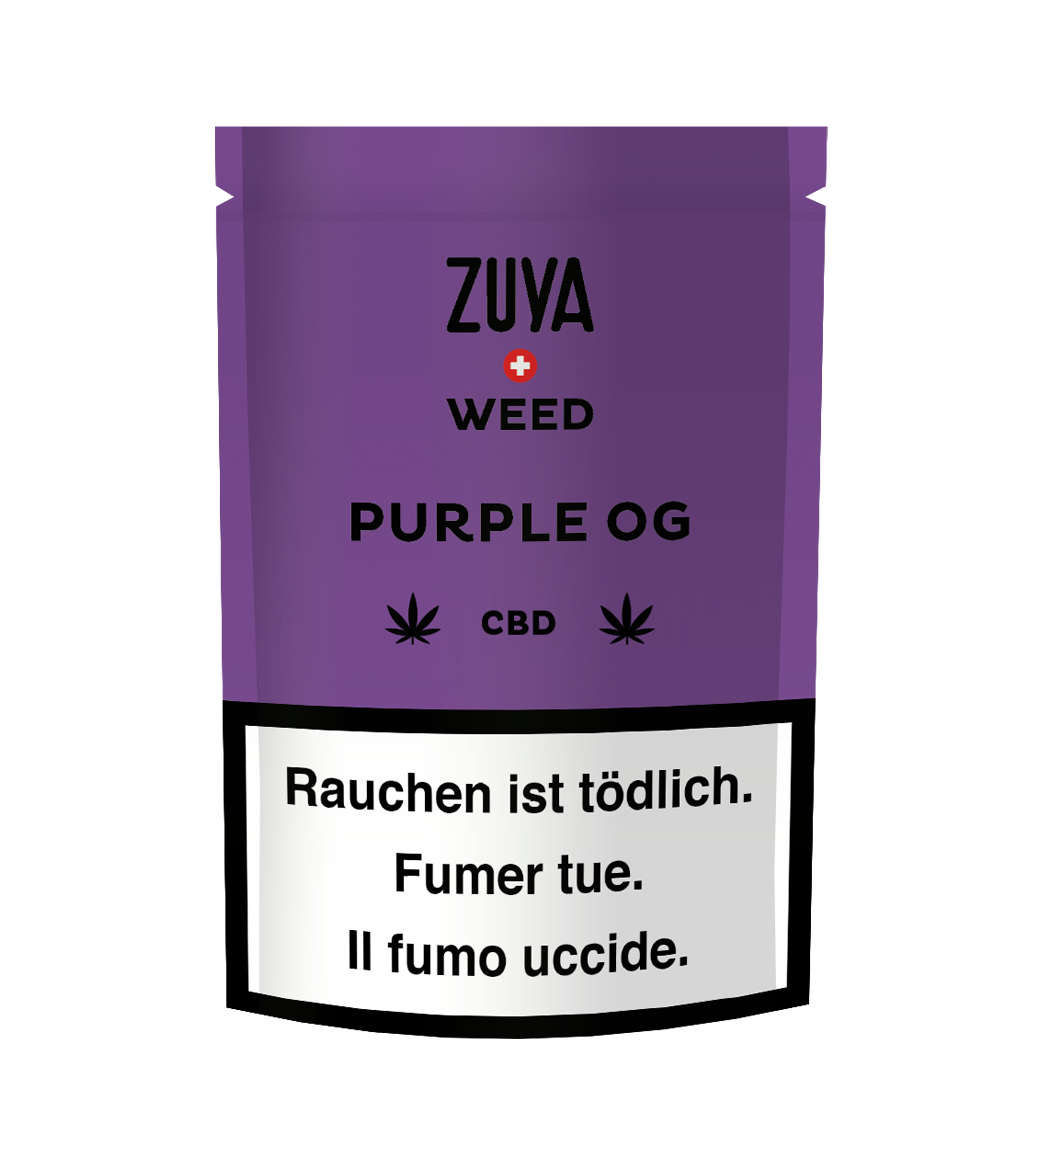 ZUYA Weed PURPLE OG “on the go” - 2g